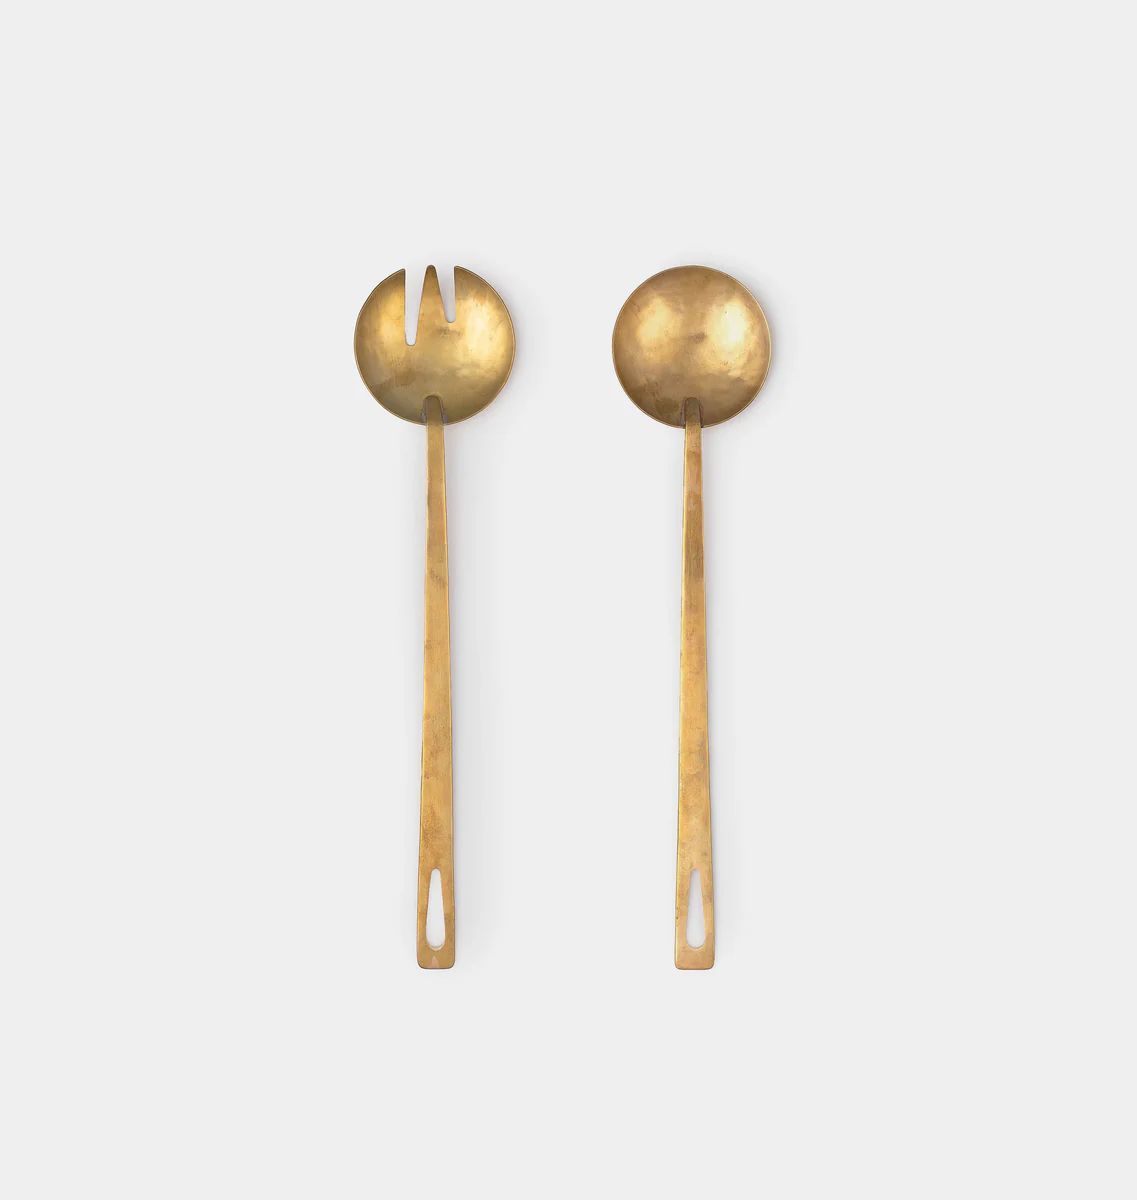 Handmade Brass Serving Utensils | Amber Interiors